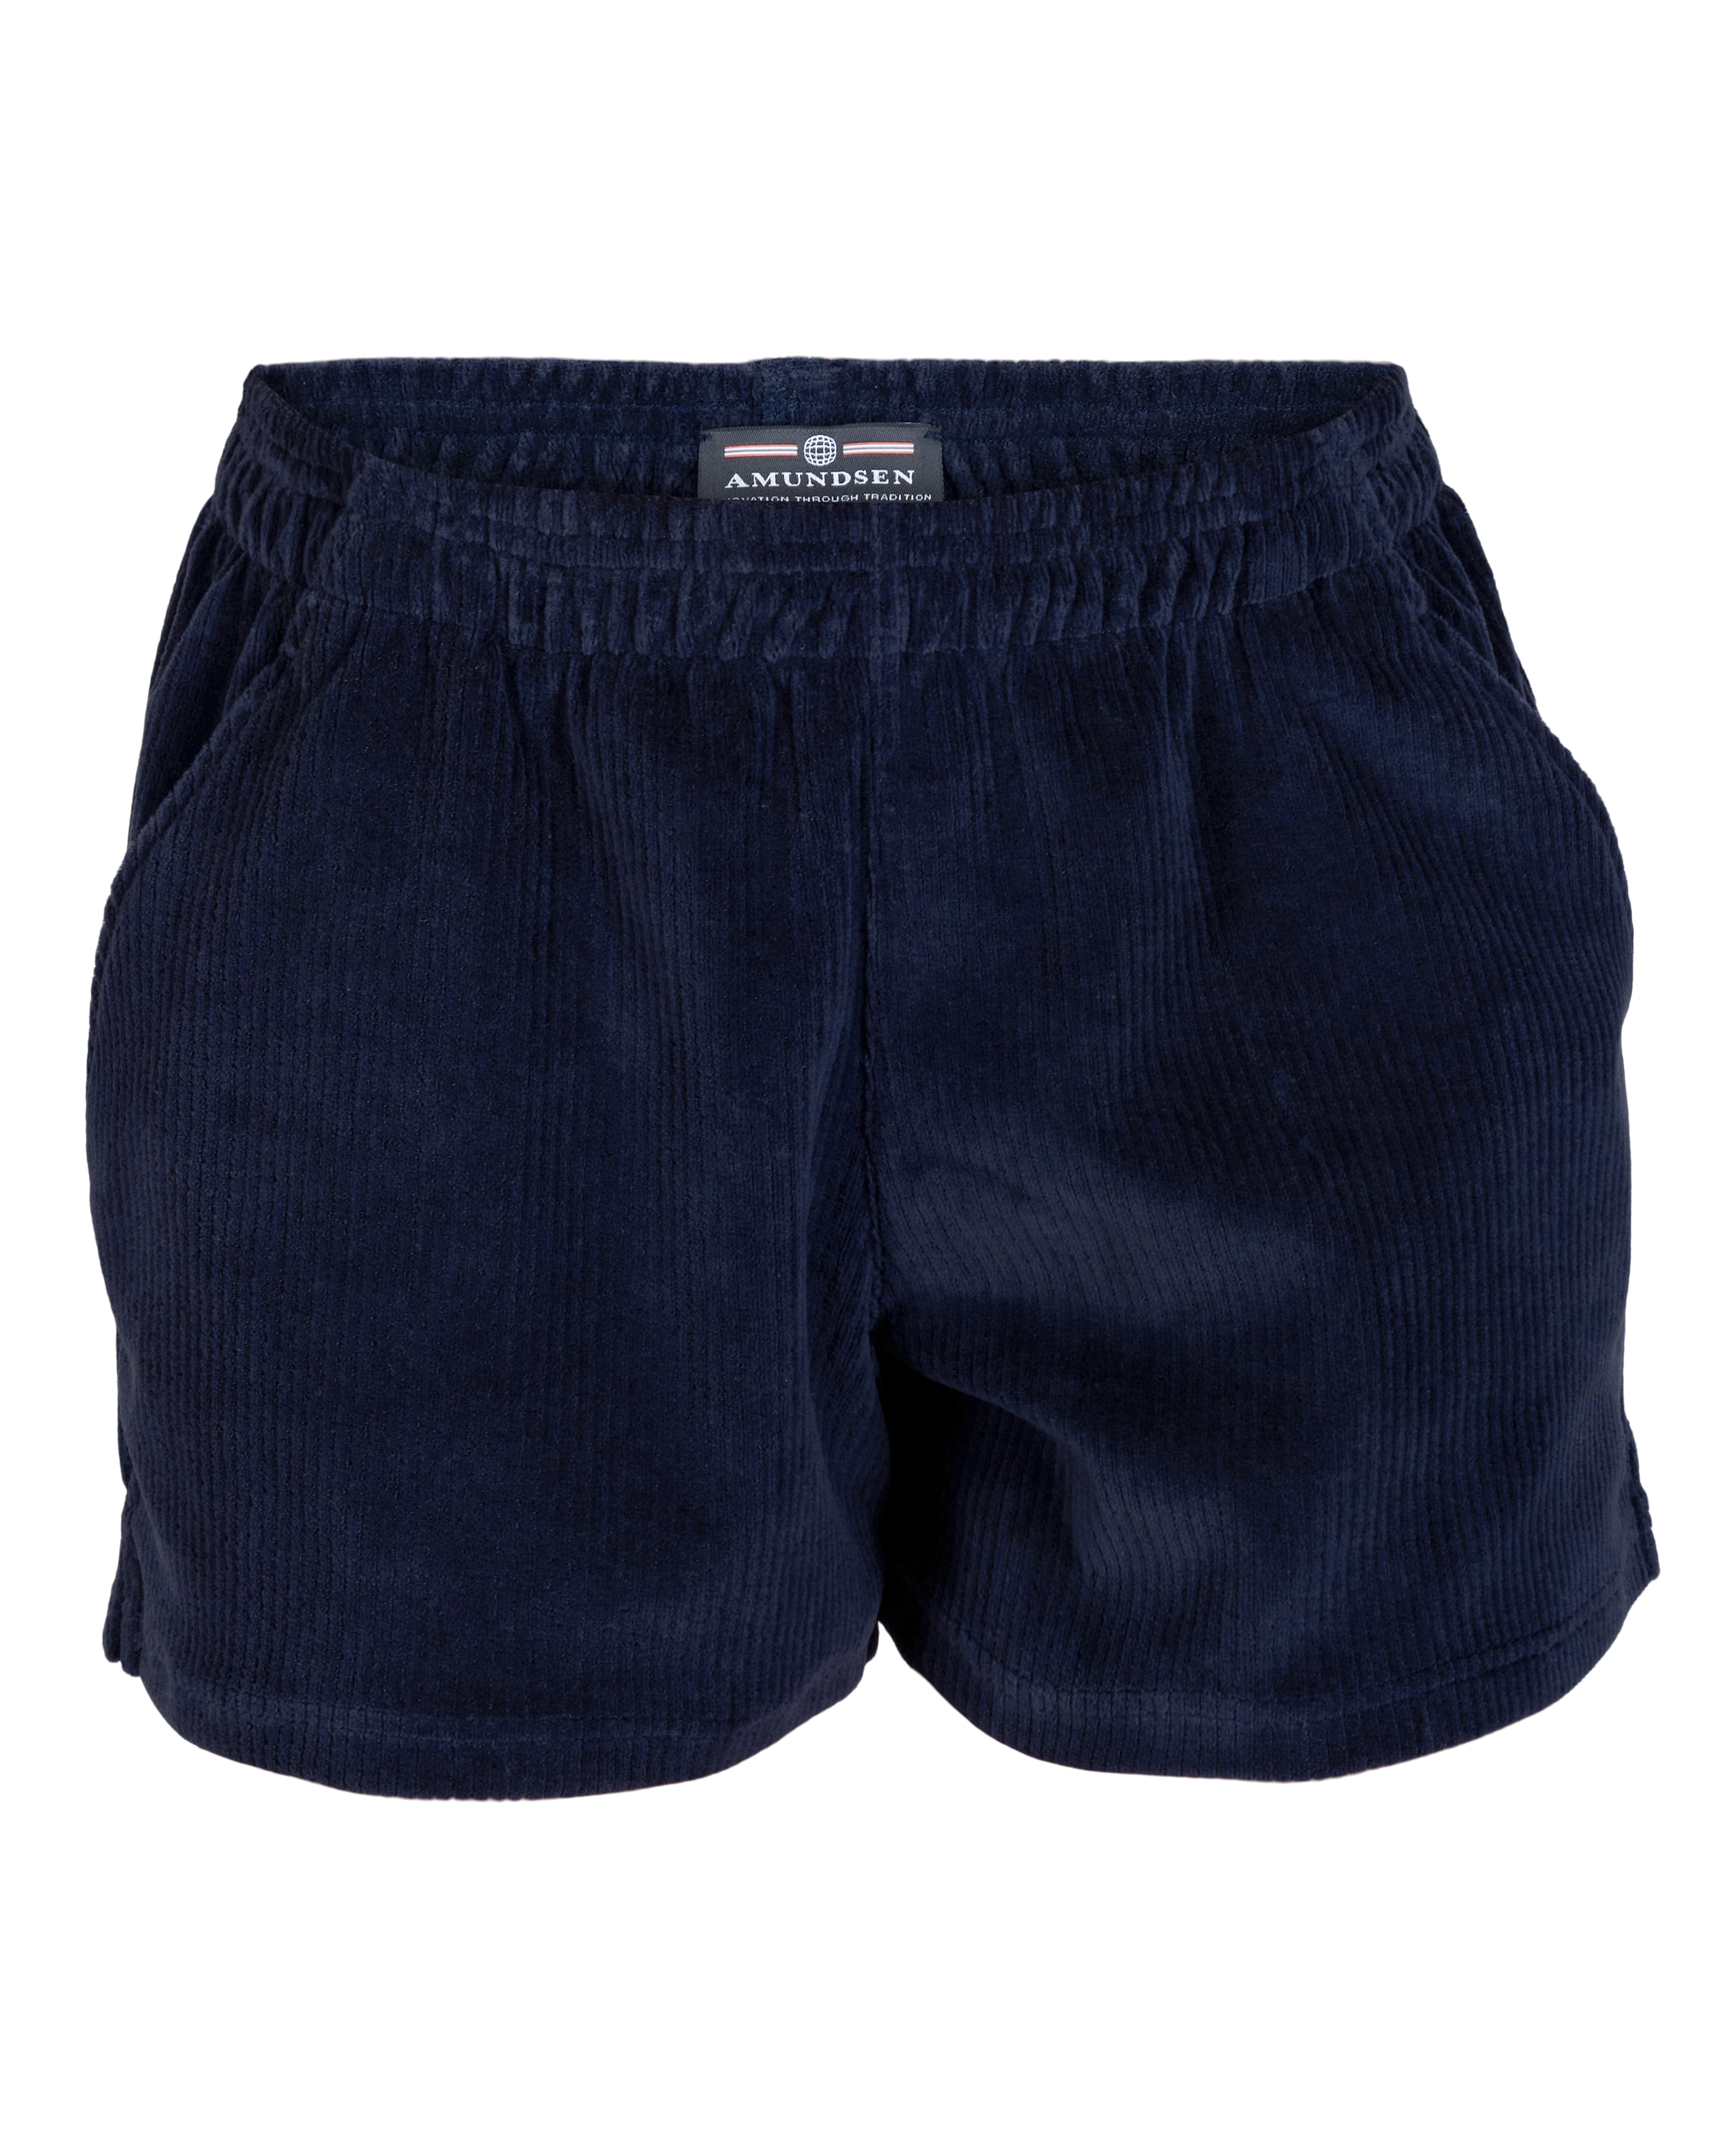 Amundsen 4incher Comfy Cord Shorts, Ws